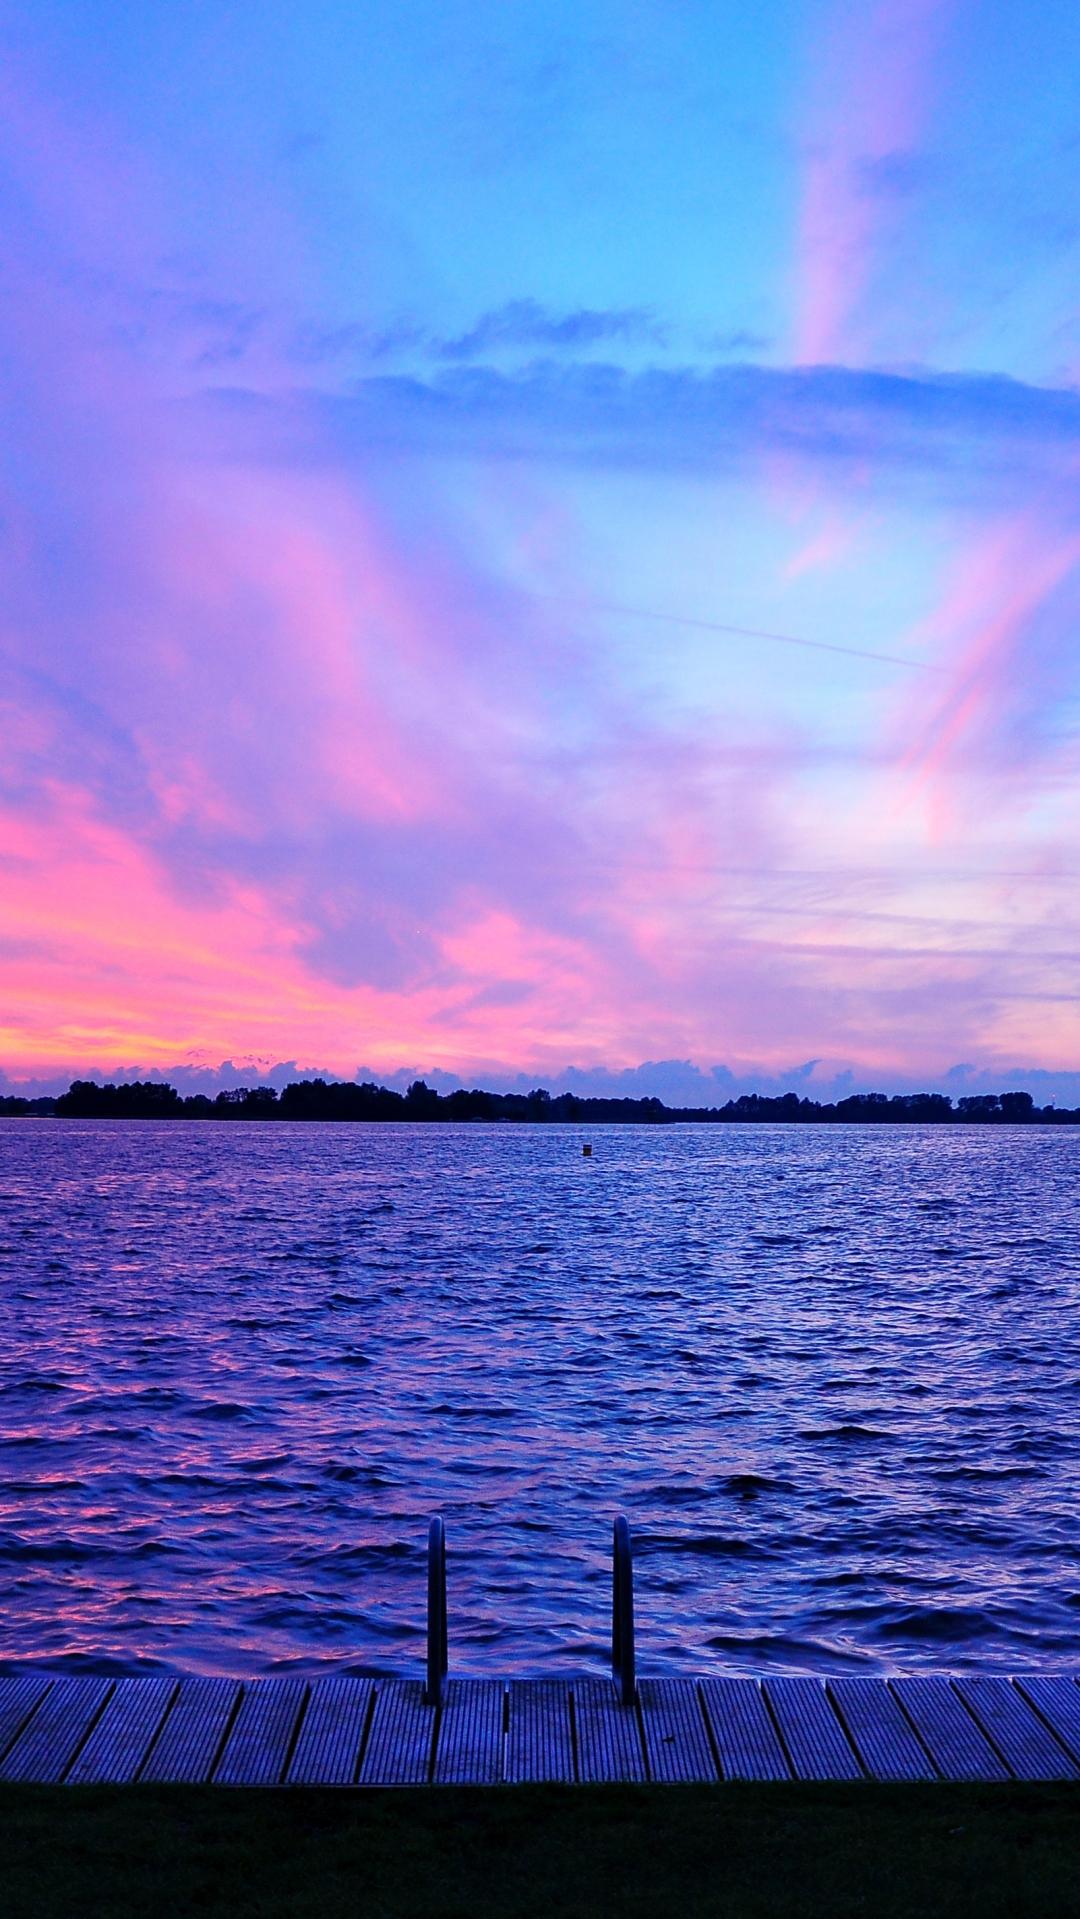 Pink Sunset Over Water iPhone Wallpaper iDrop News